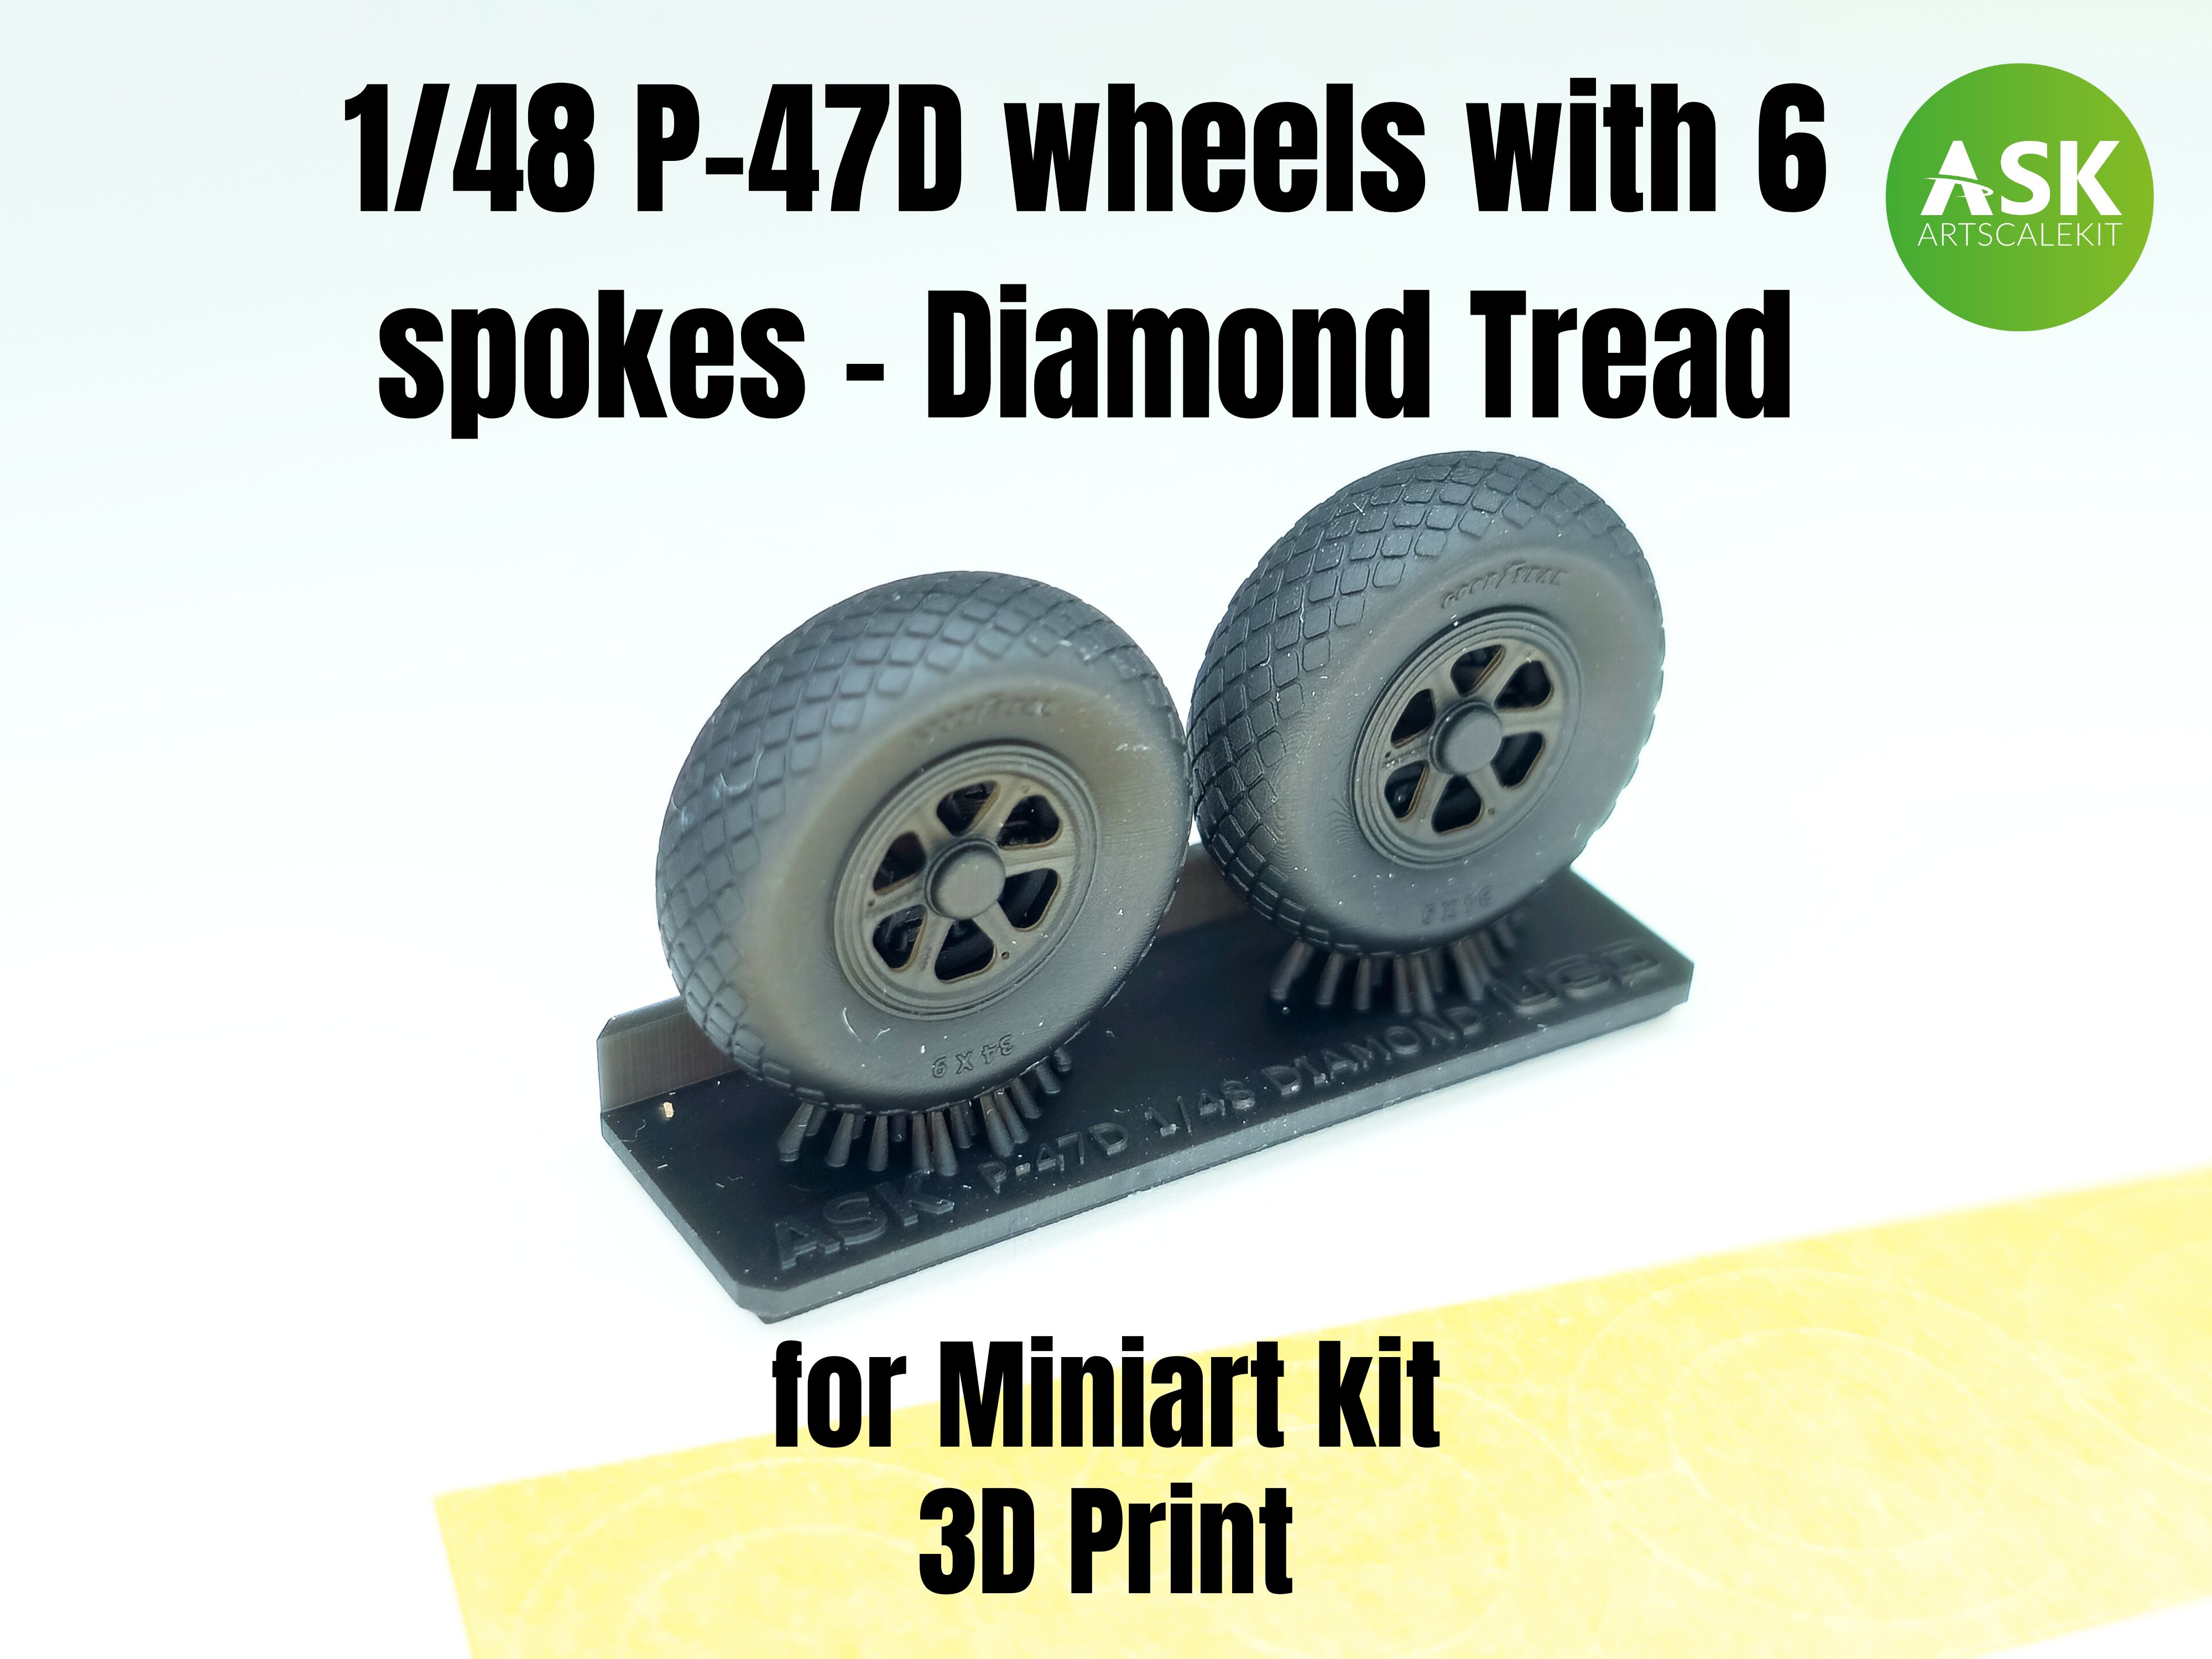 1/48 P-47D wheels with 6 spokes - Diamond Tread and masks